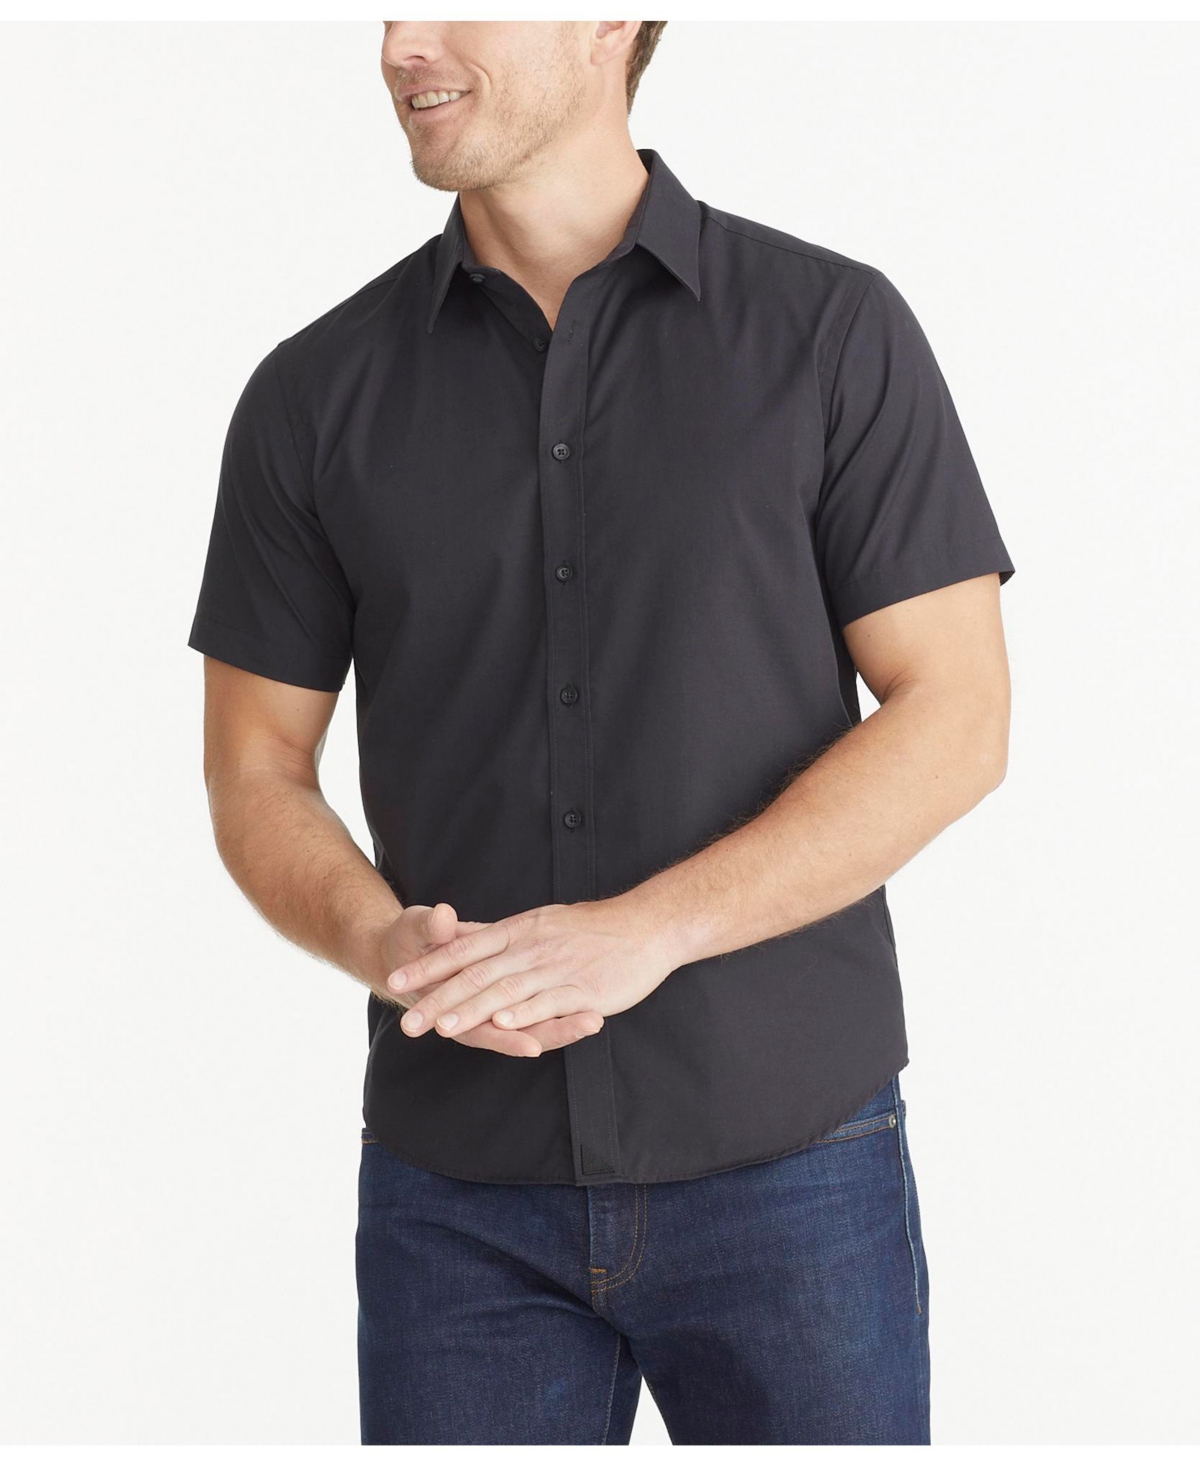 Men's Slim Fit Classic Short-Sleeve Coufran Button Up Shirt - Black